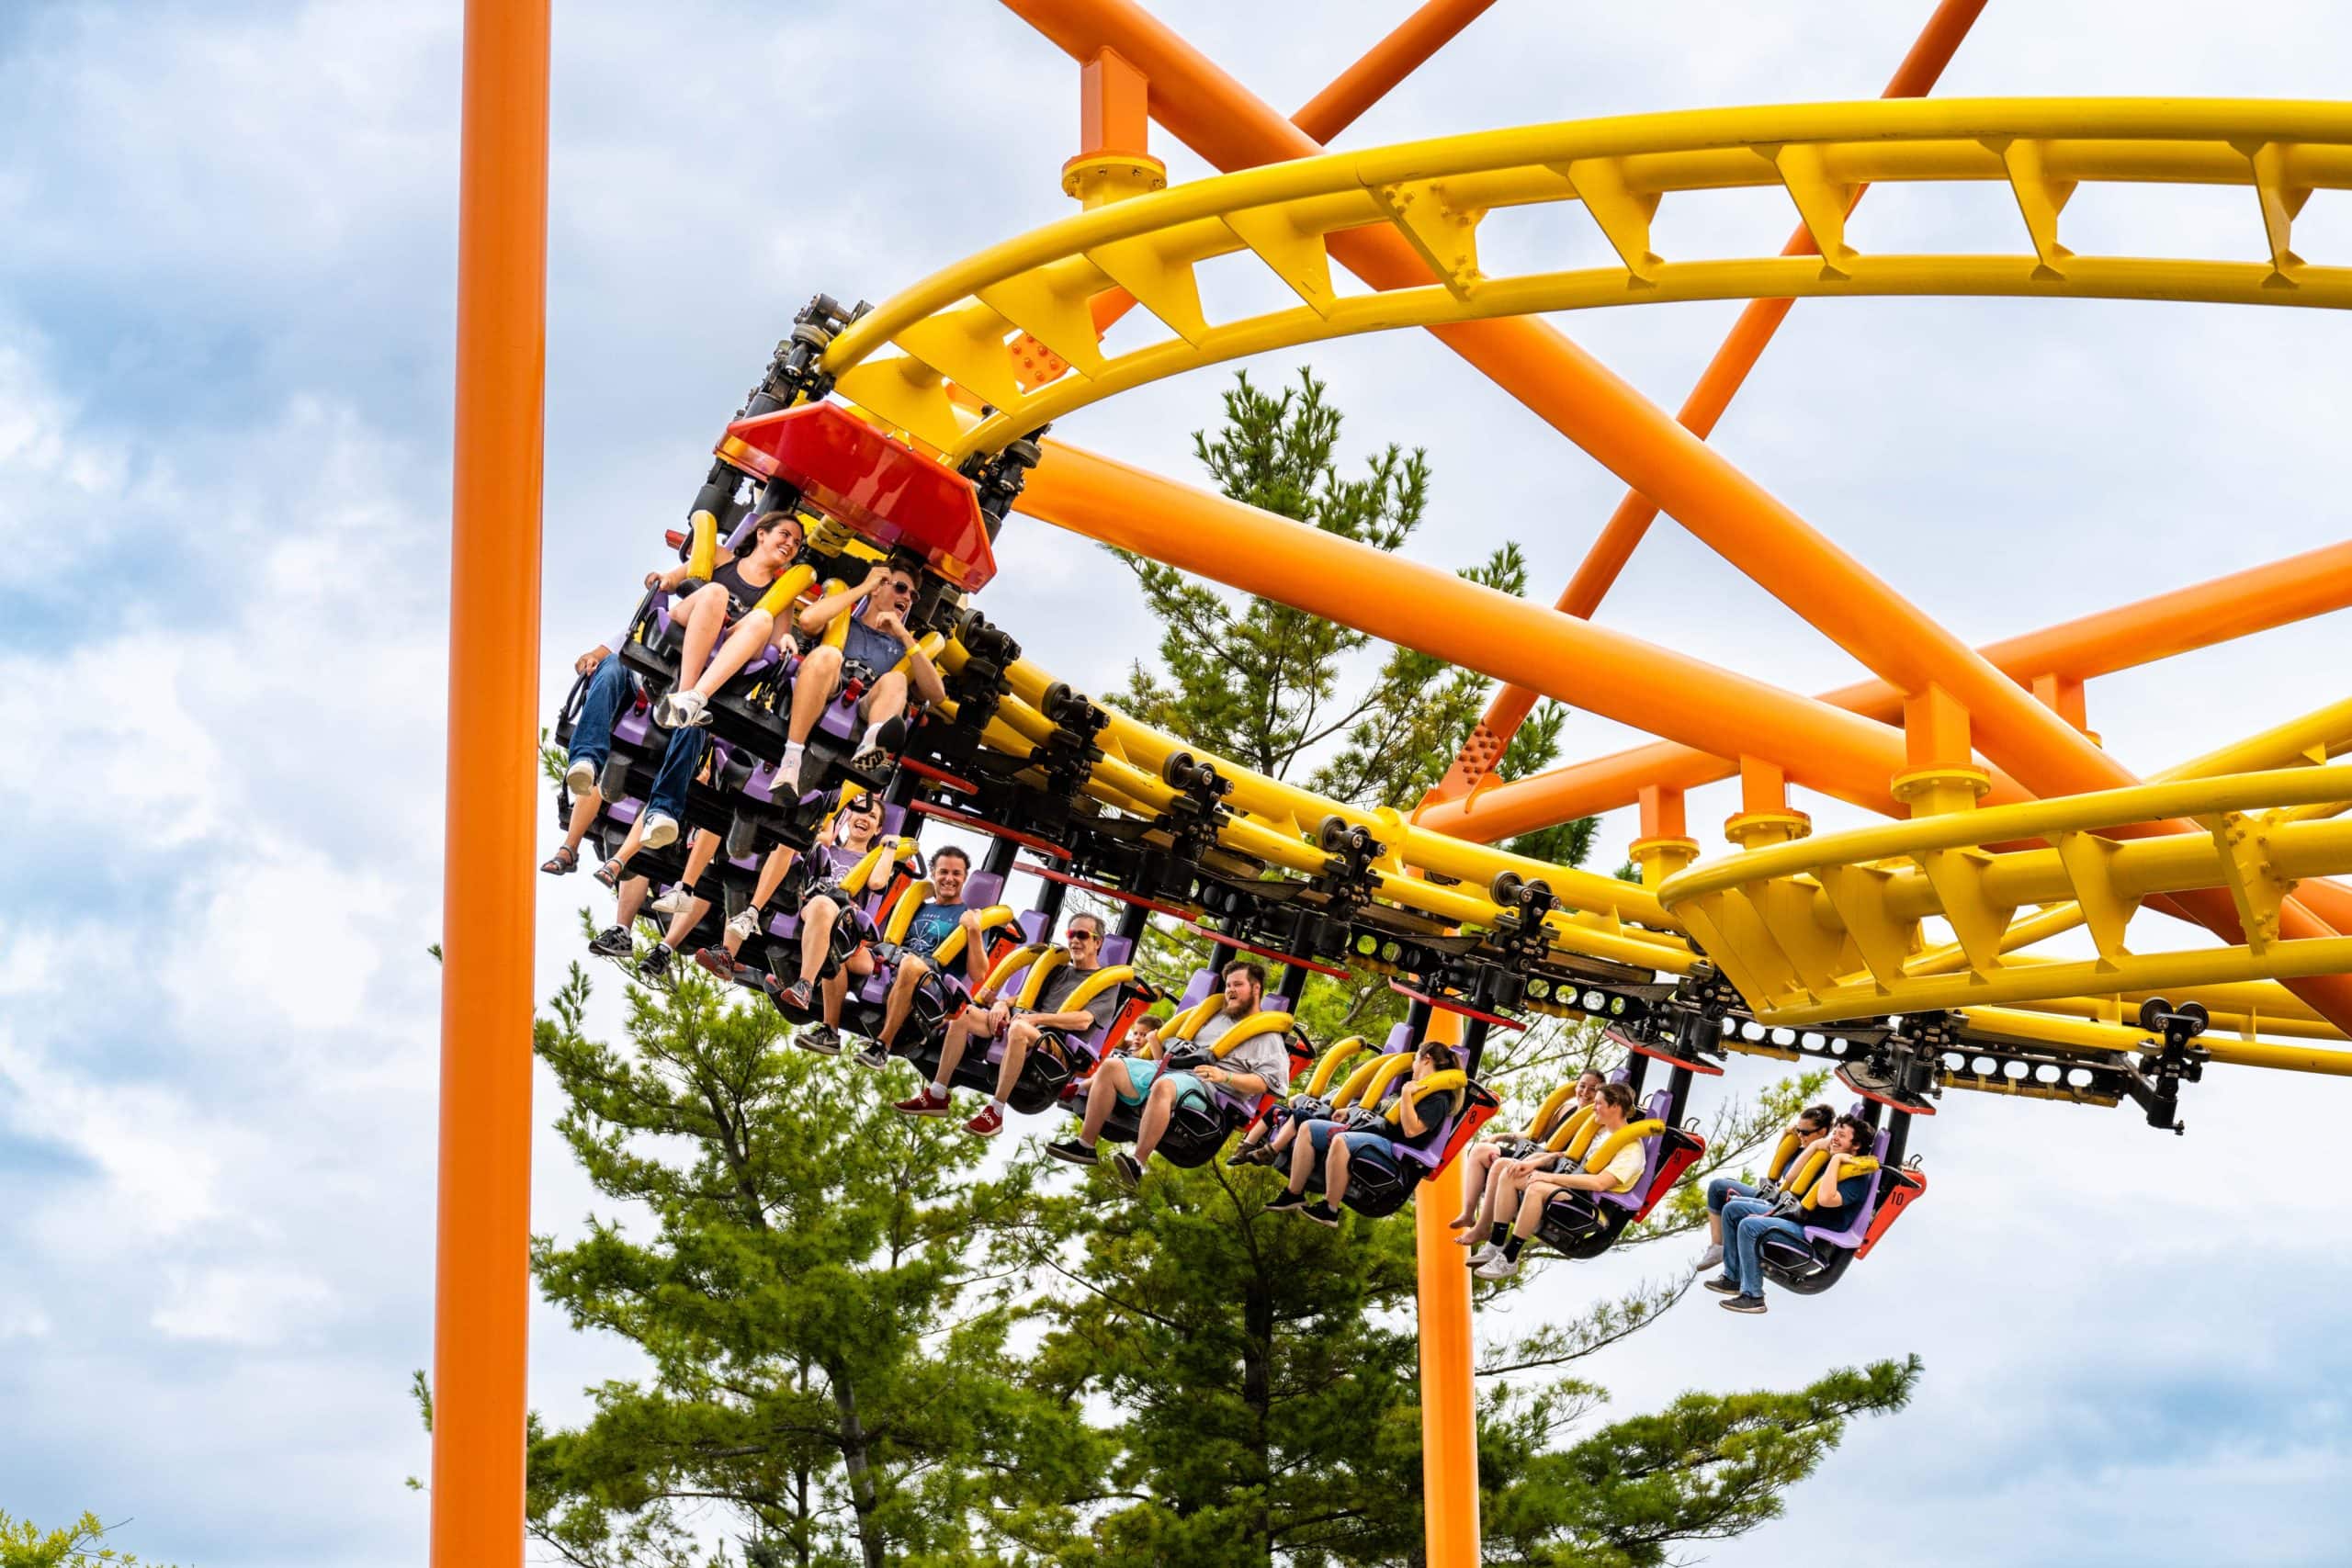 Kids roller coaster at kings island amusement park owned by cedar fair in Mason, OH.